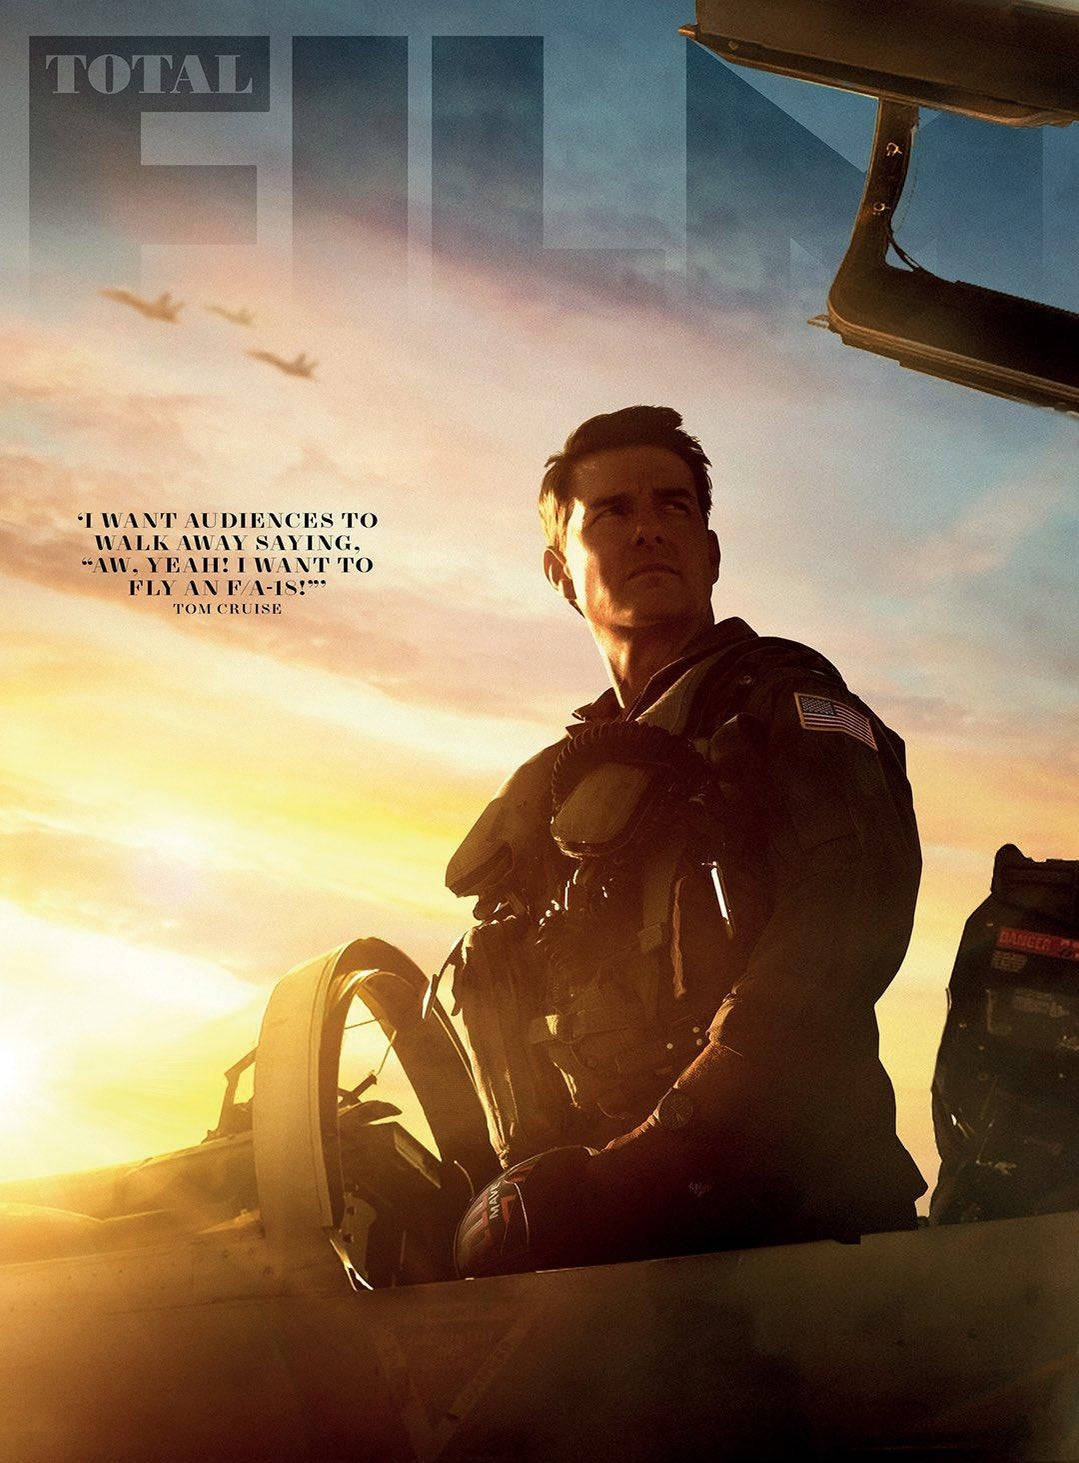 Top Gun: Maverick Action Movie Poster Wallpaper